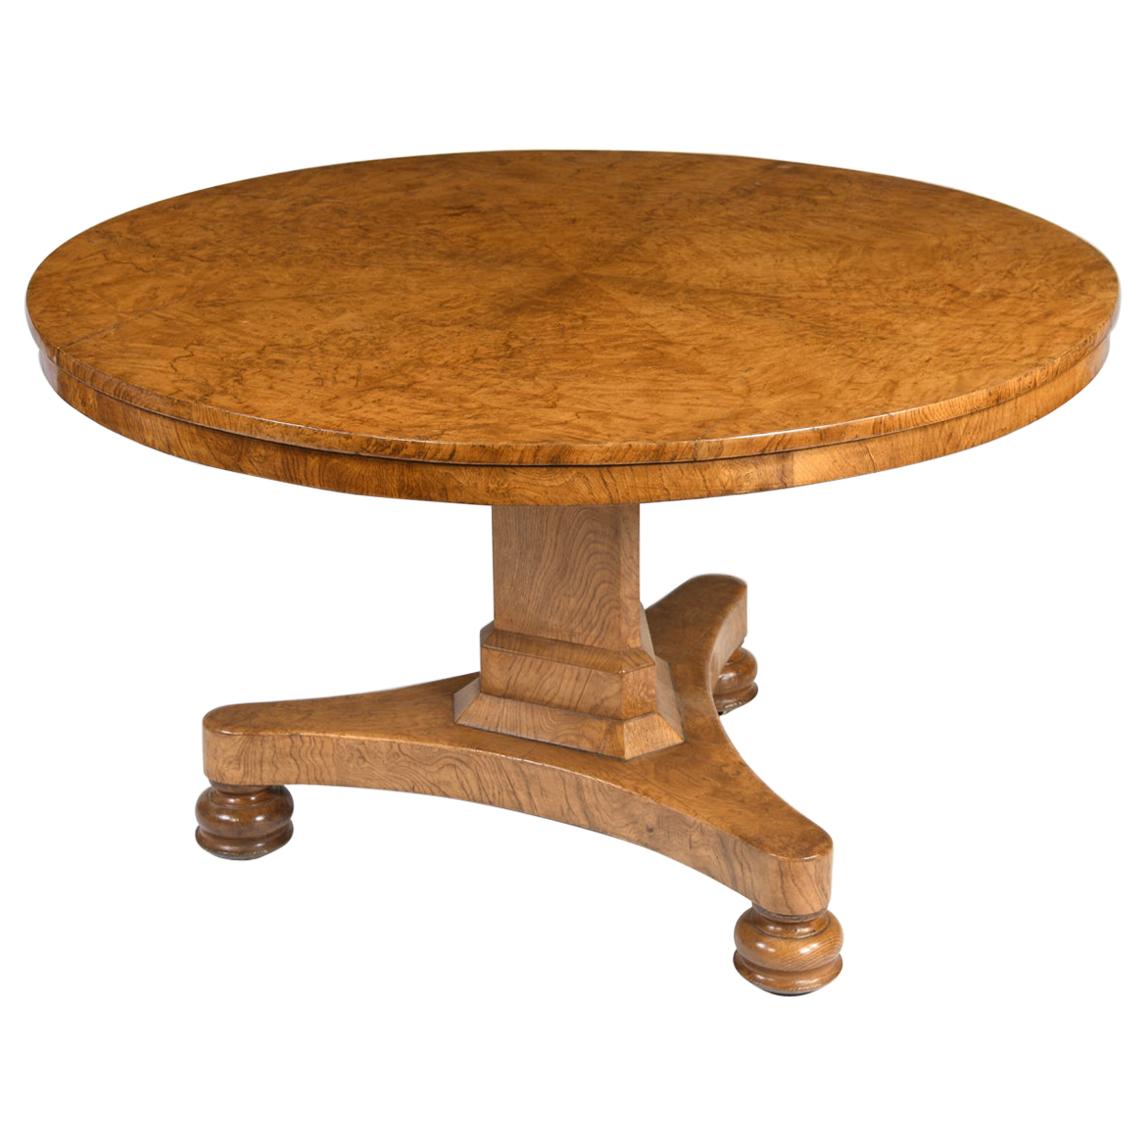 English William IV Period Pollard Oak Center Table, circa 1835